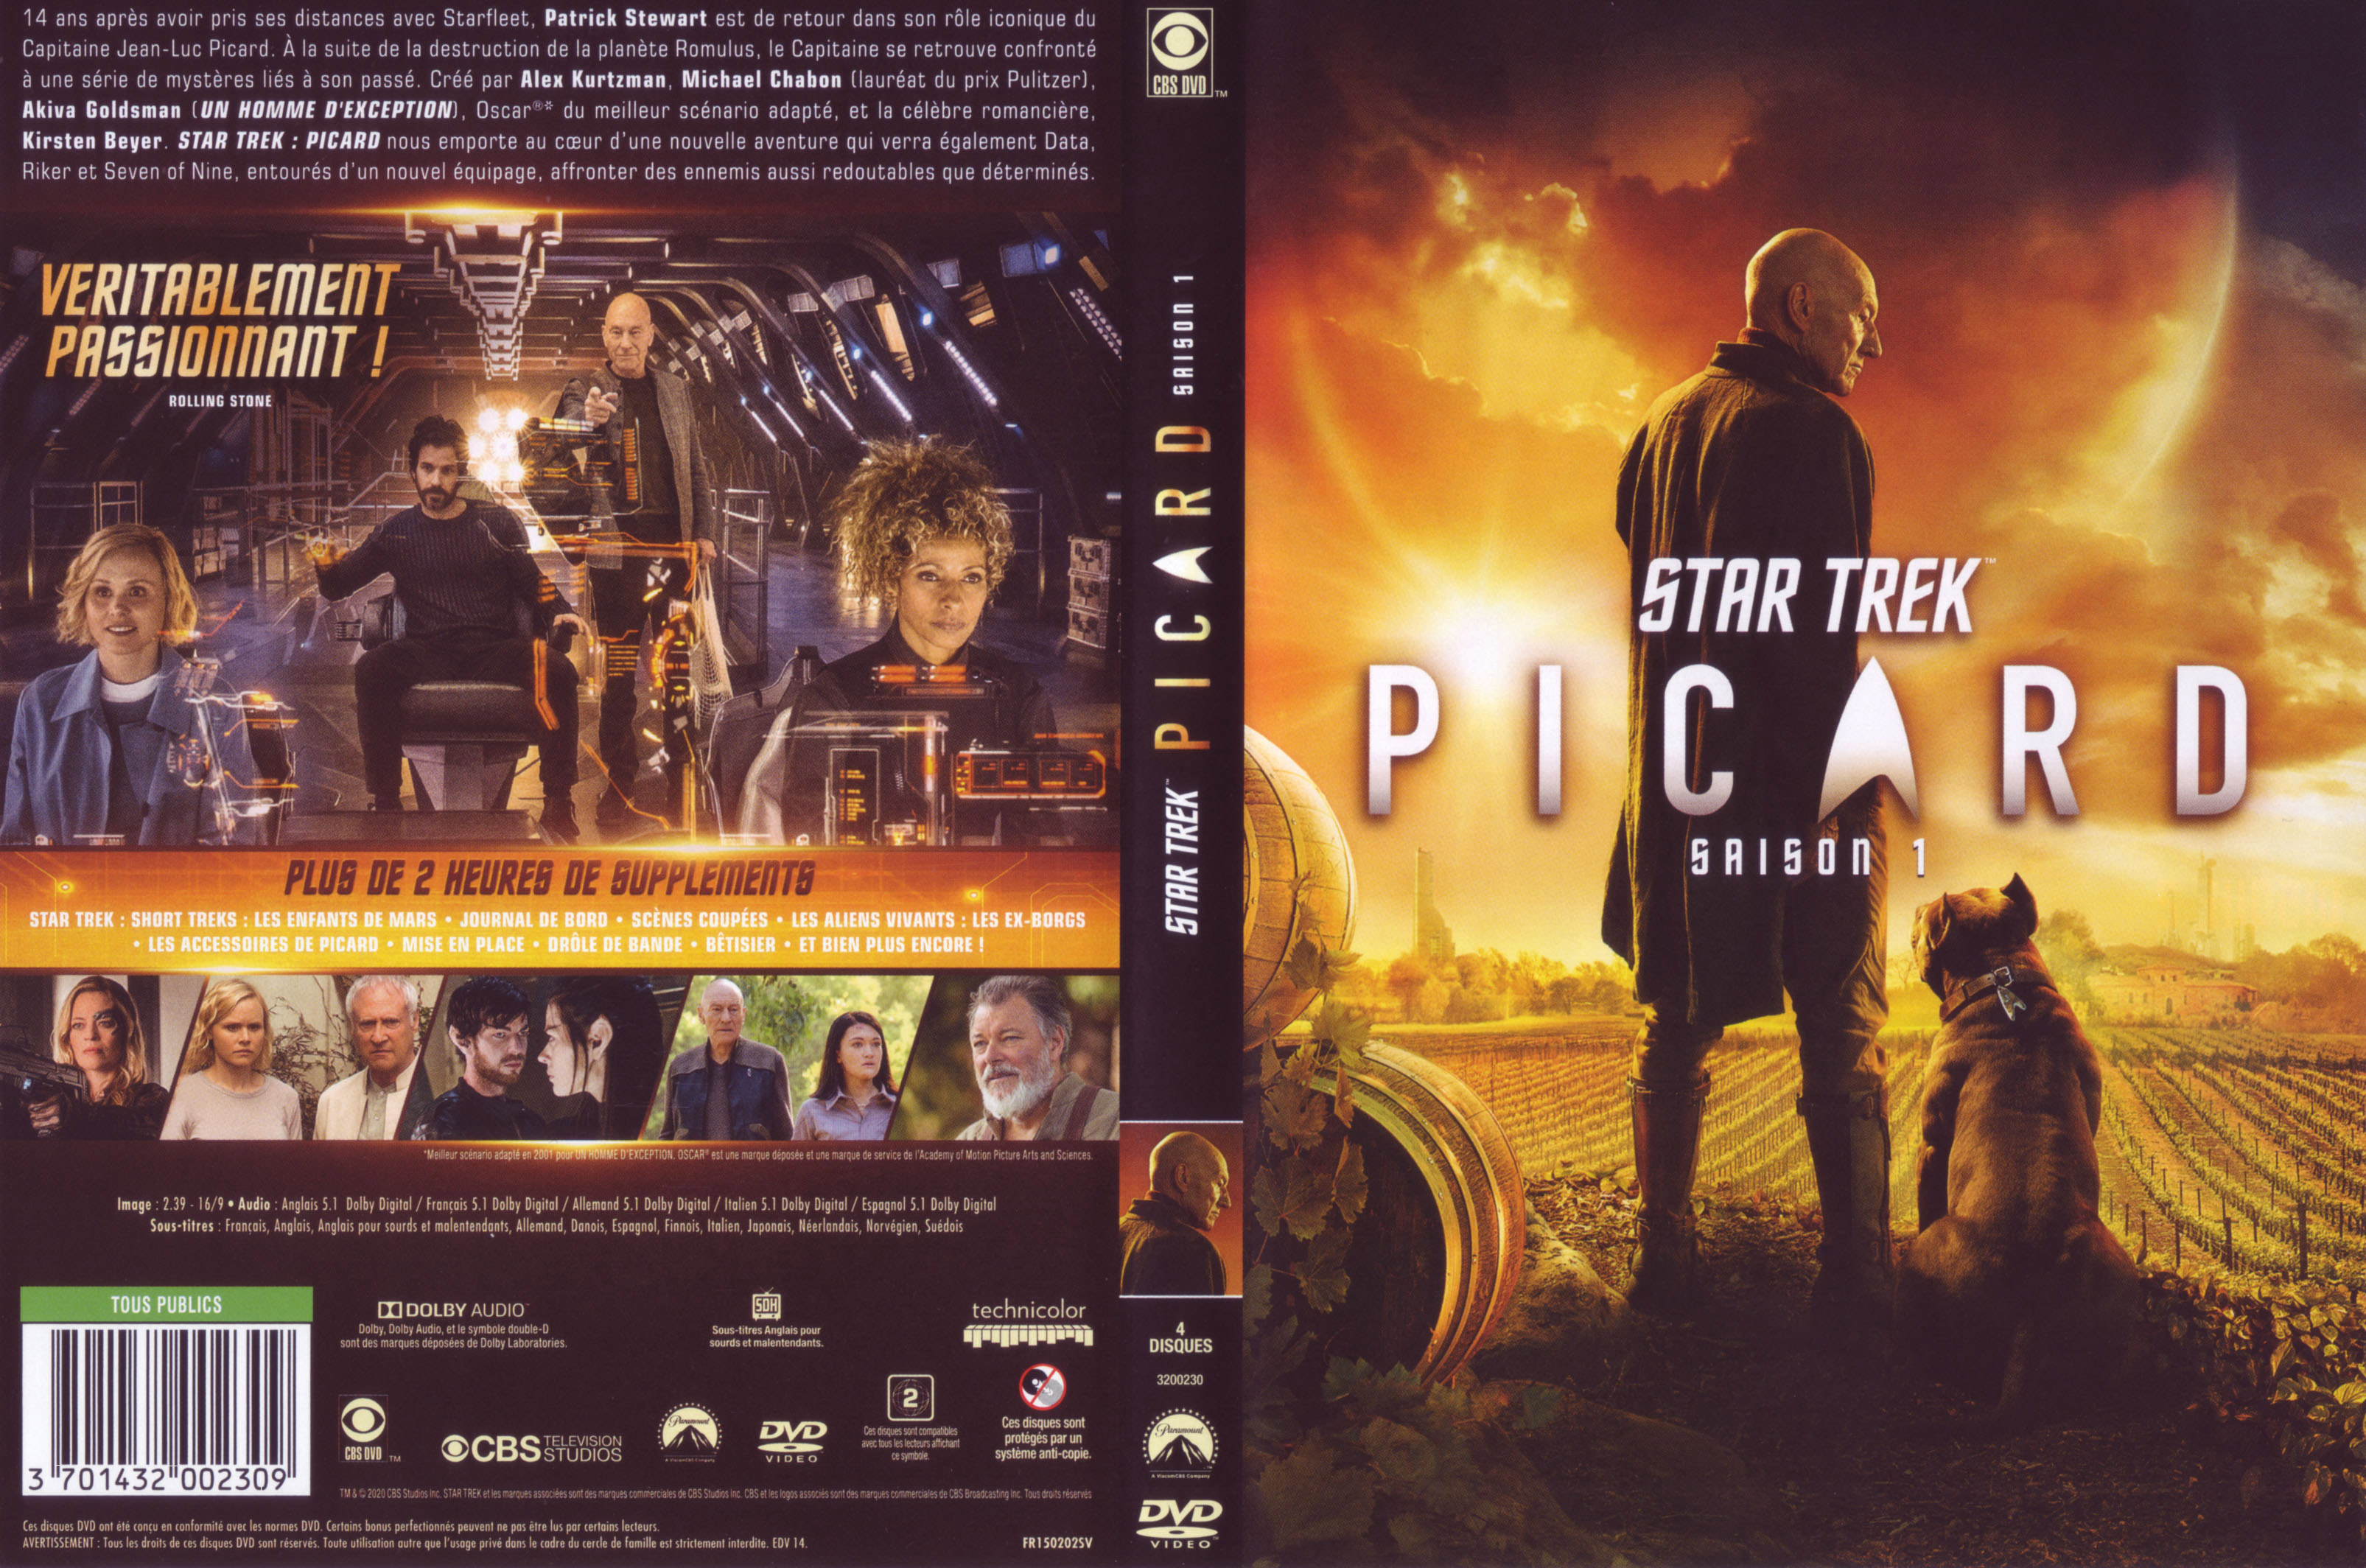 Jaquette DVD Star Trek Picard saison 1